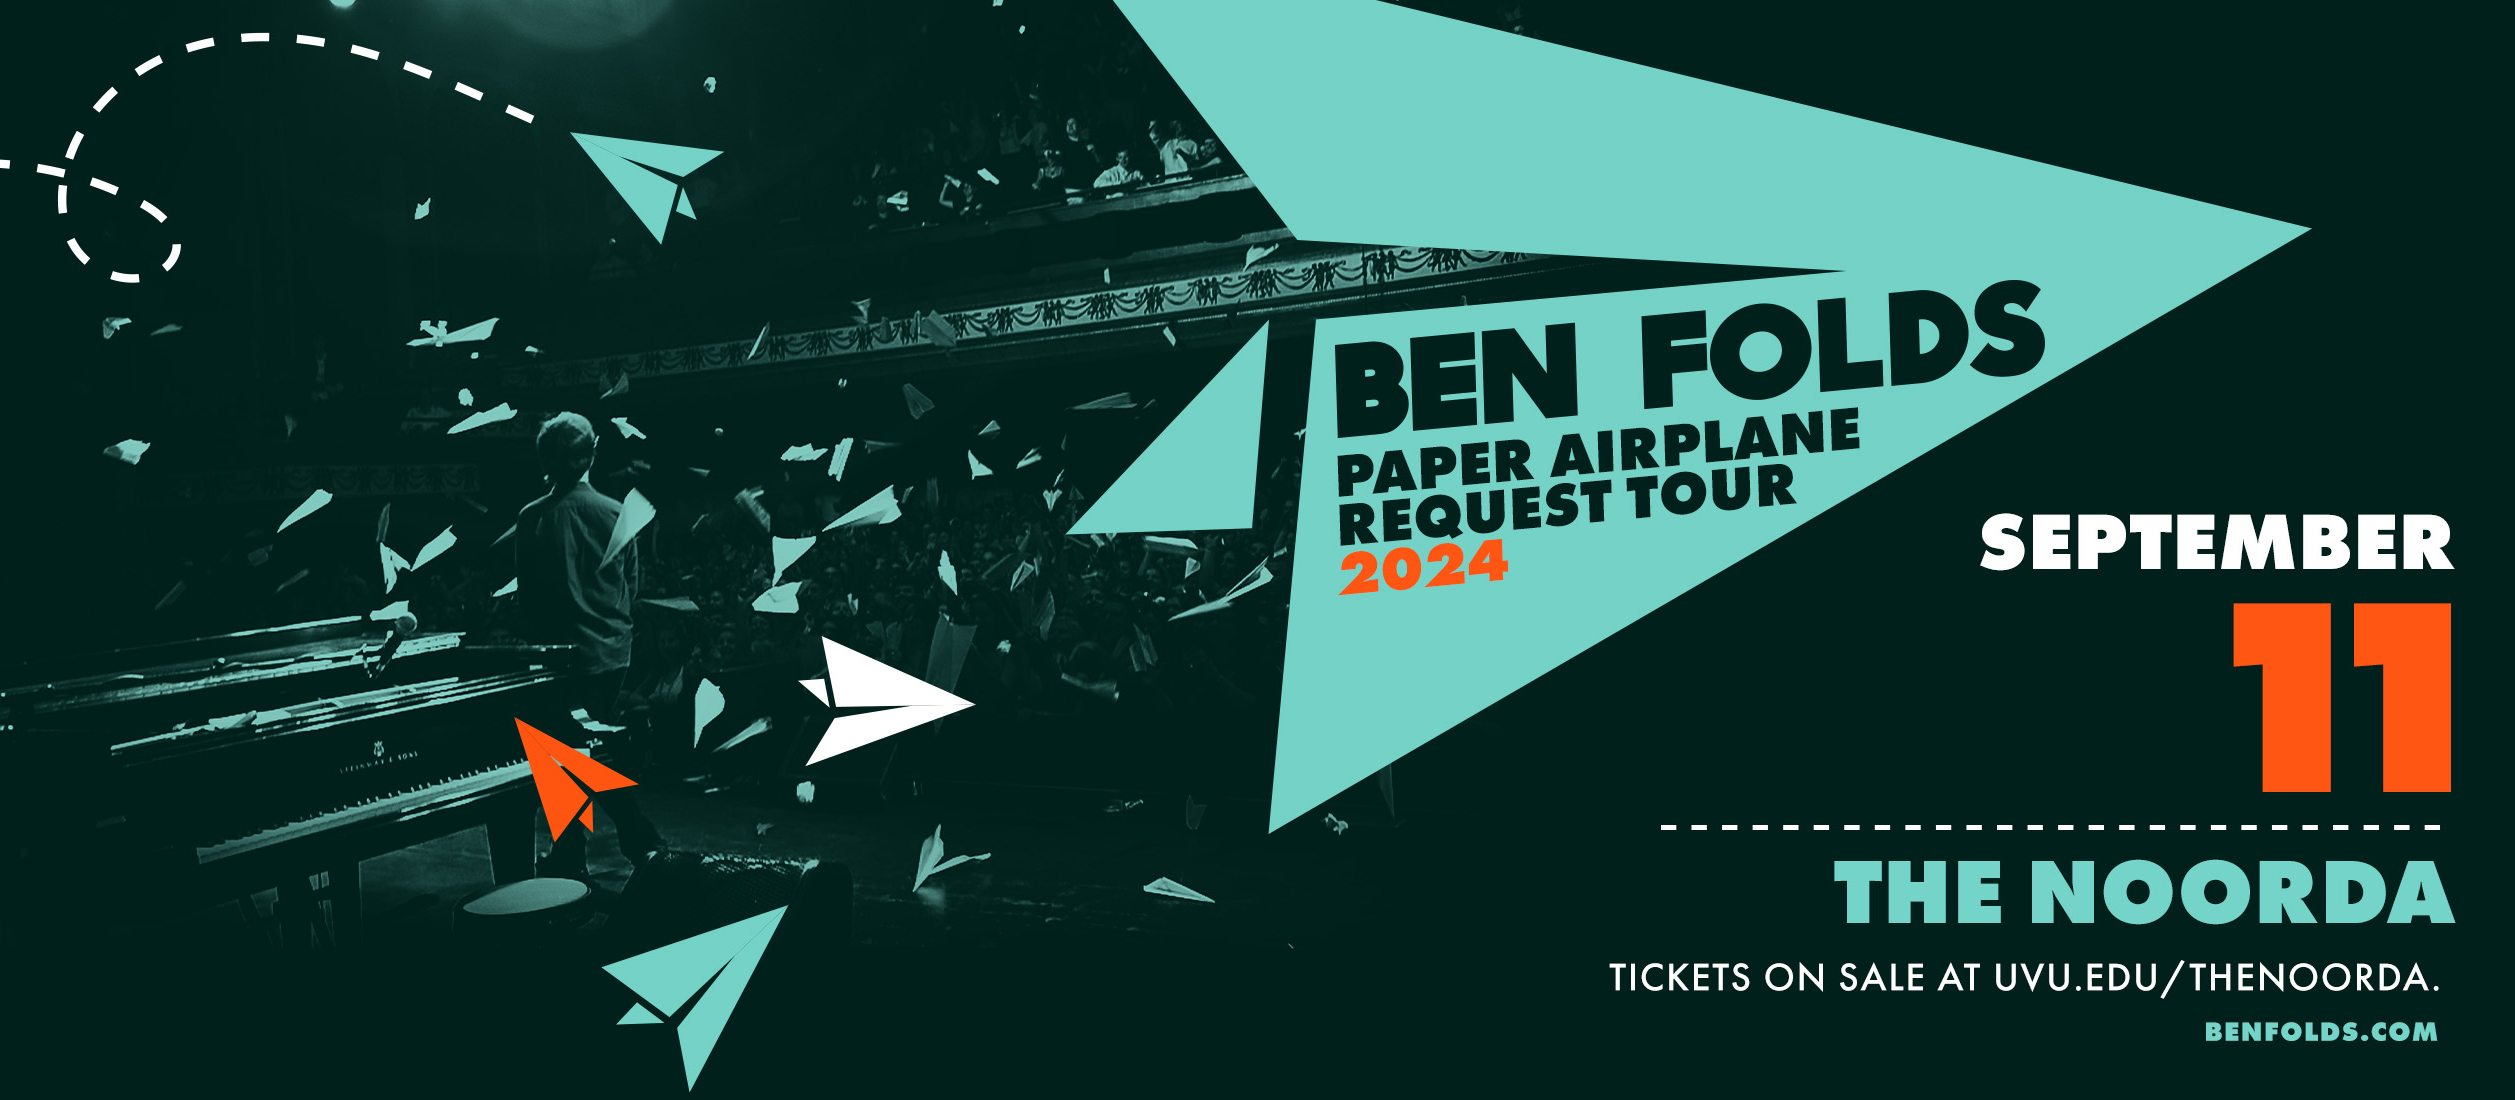 Ben Folds Paper Airplane Request Tour 2024 | Sept. 11 | The Noorda | Tickets on Sale at uvu.edu/thenoorda | benfolds.com